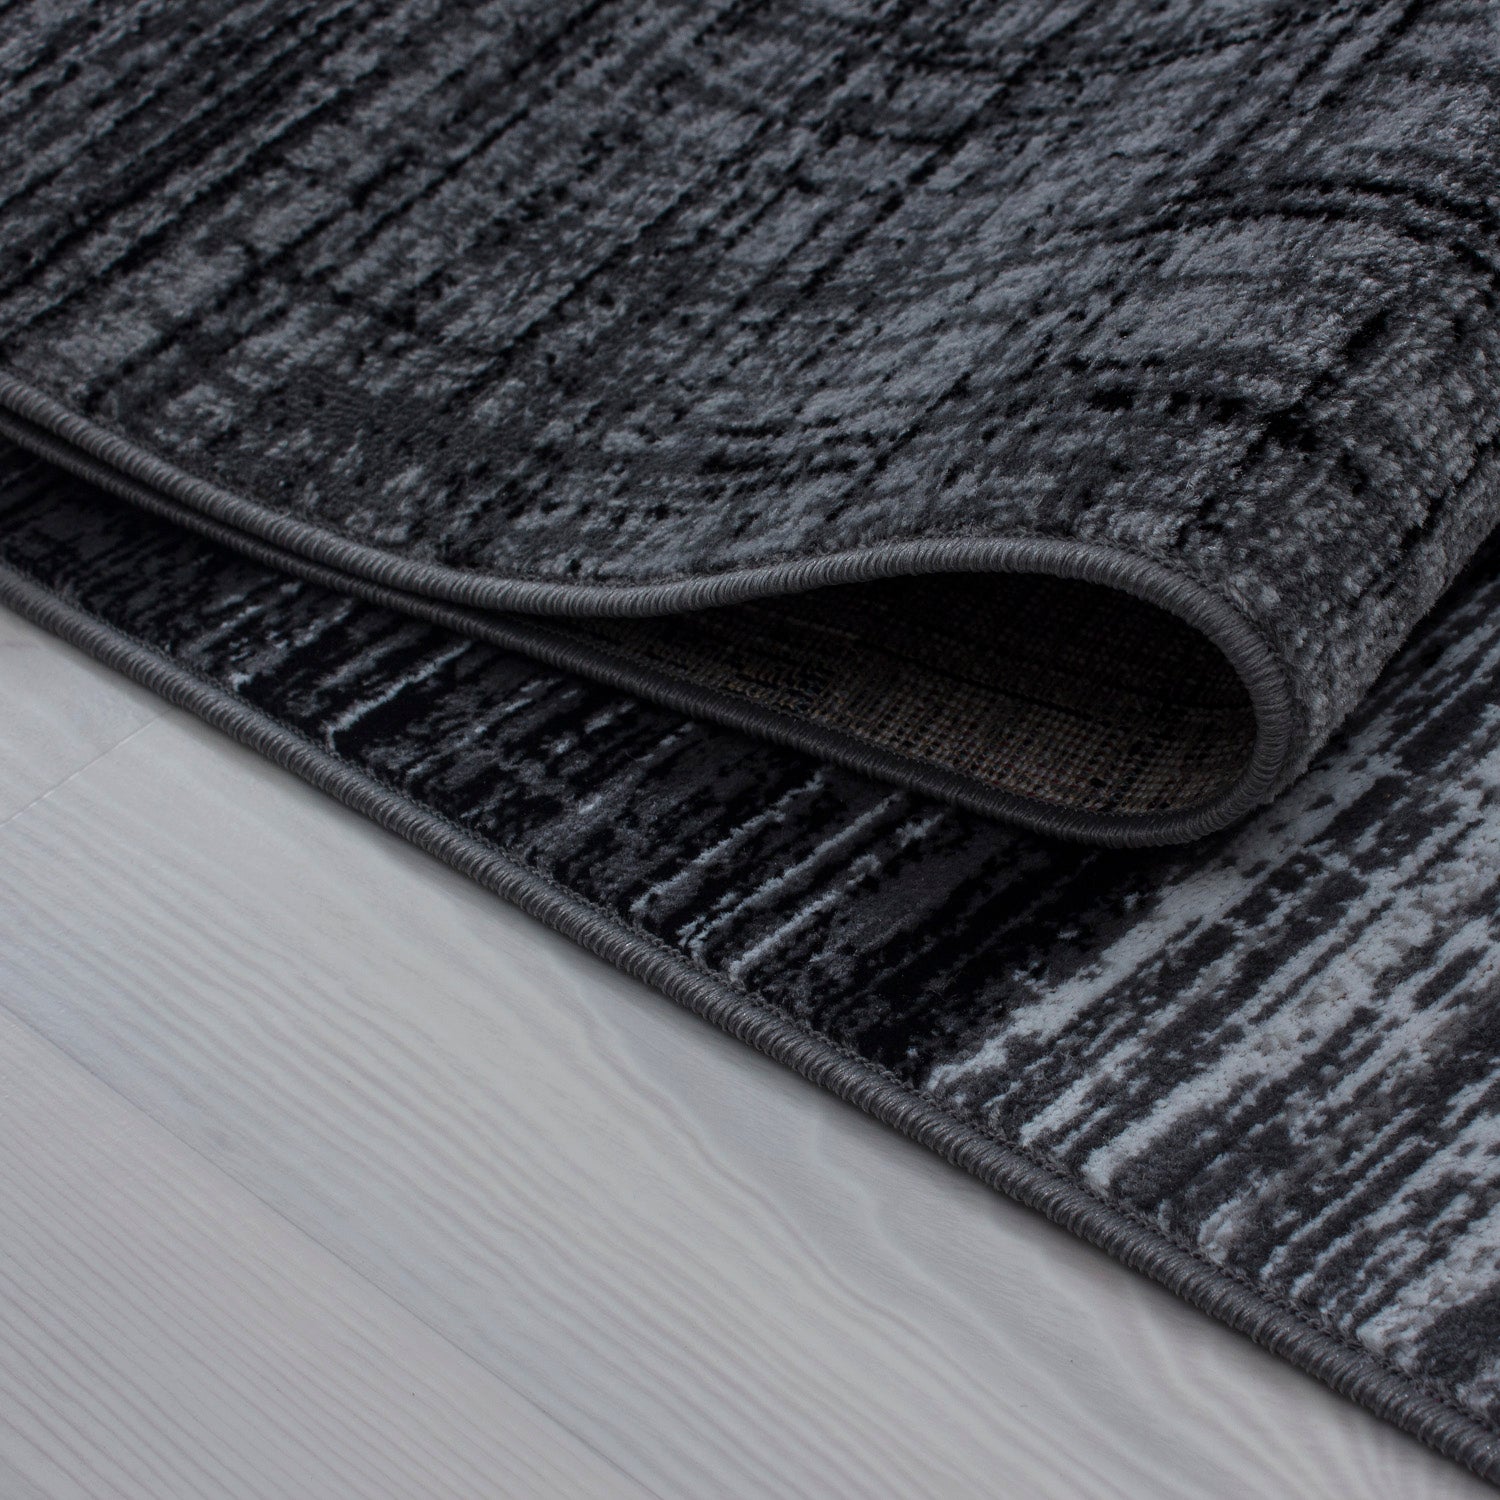 Kurzflor Design Teppich Modern geometrisches Muster Grau Schwarz Weiss Meliert